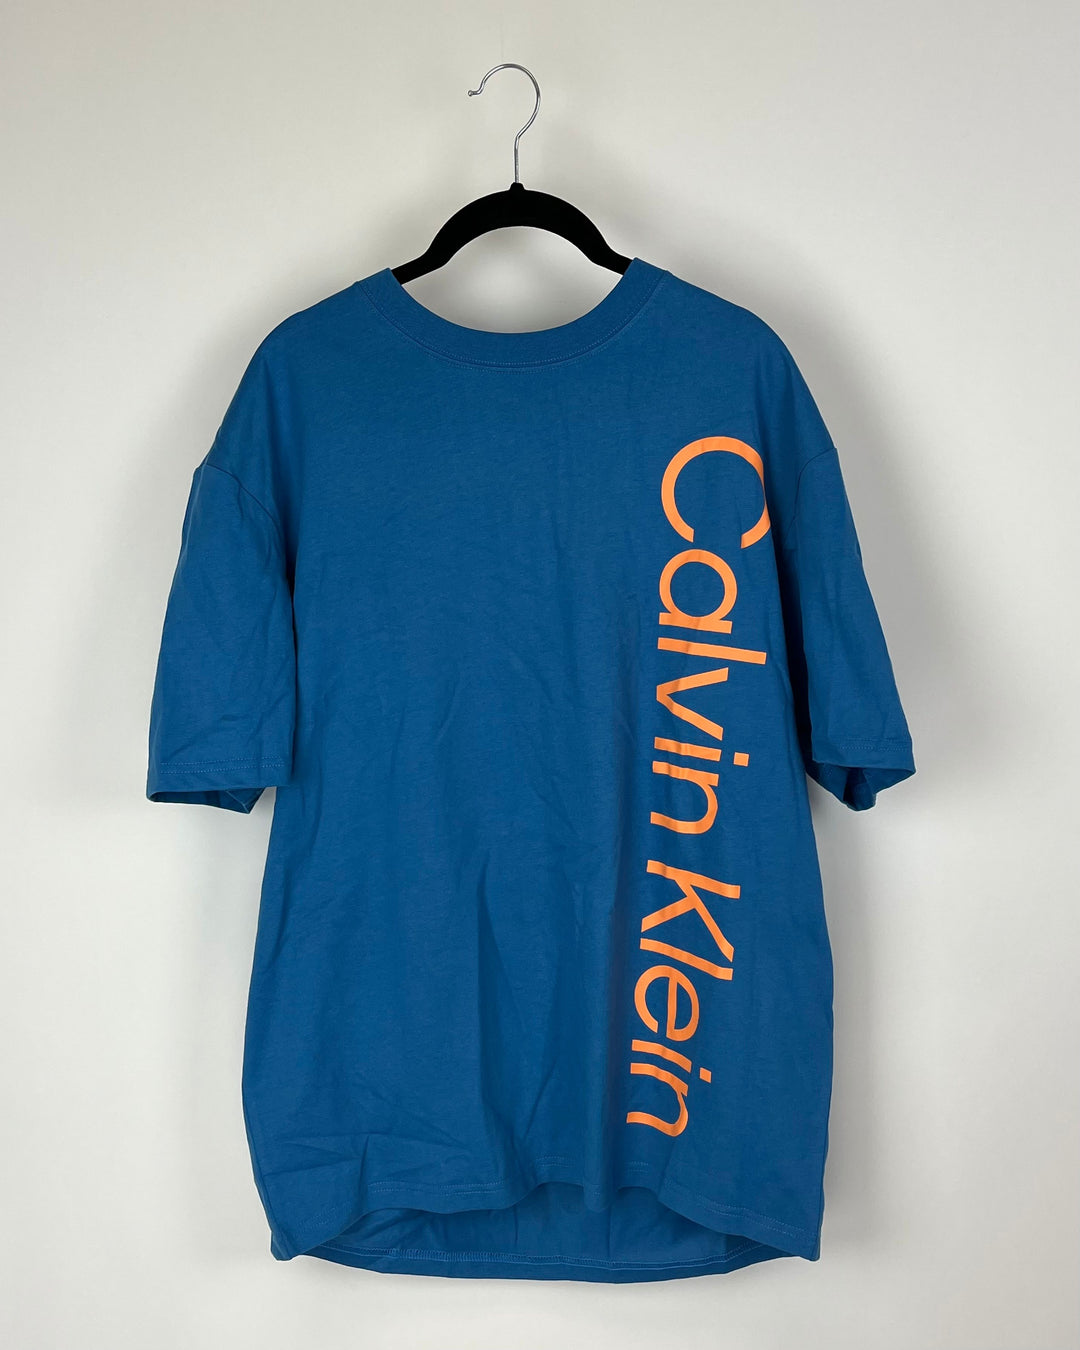 MENS Blue T-Shirt with Orange Calvin Klein Detailing - Medium